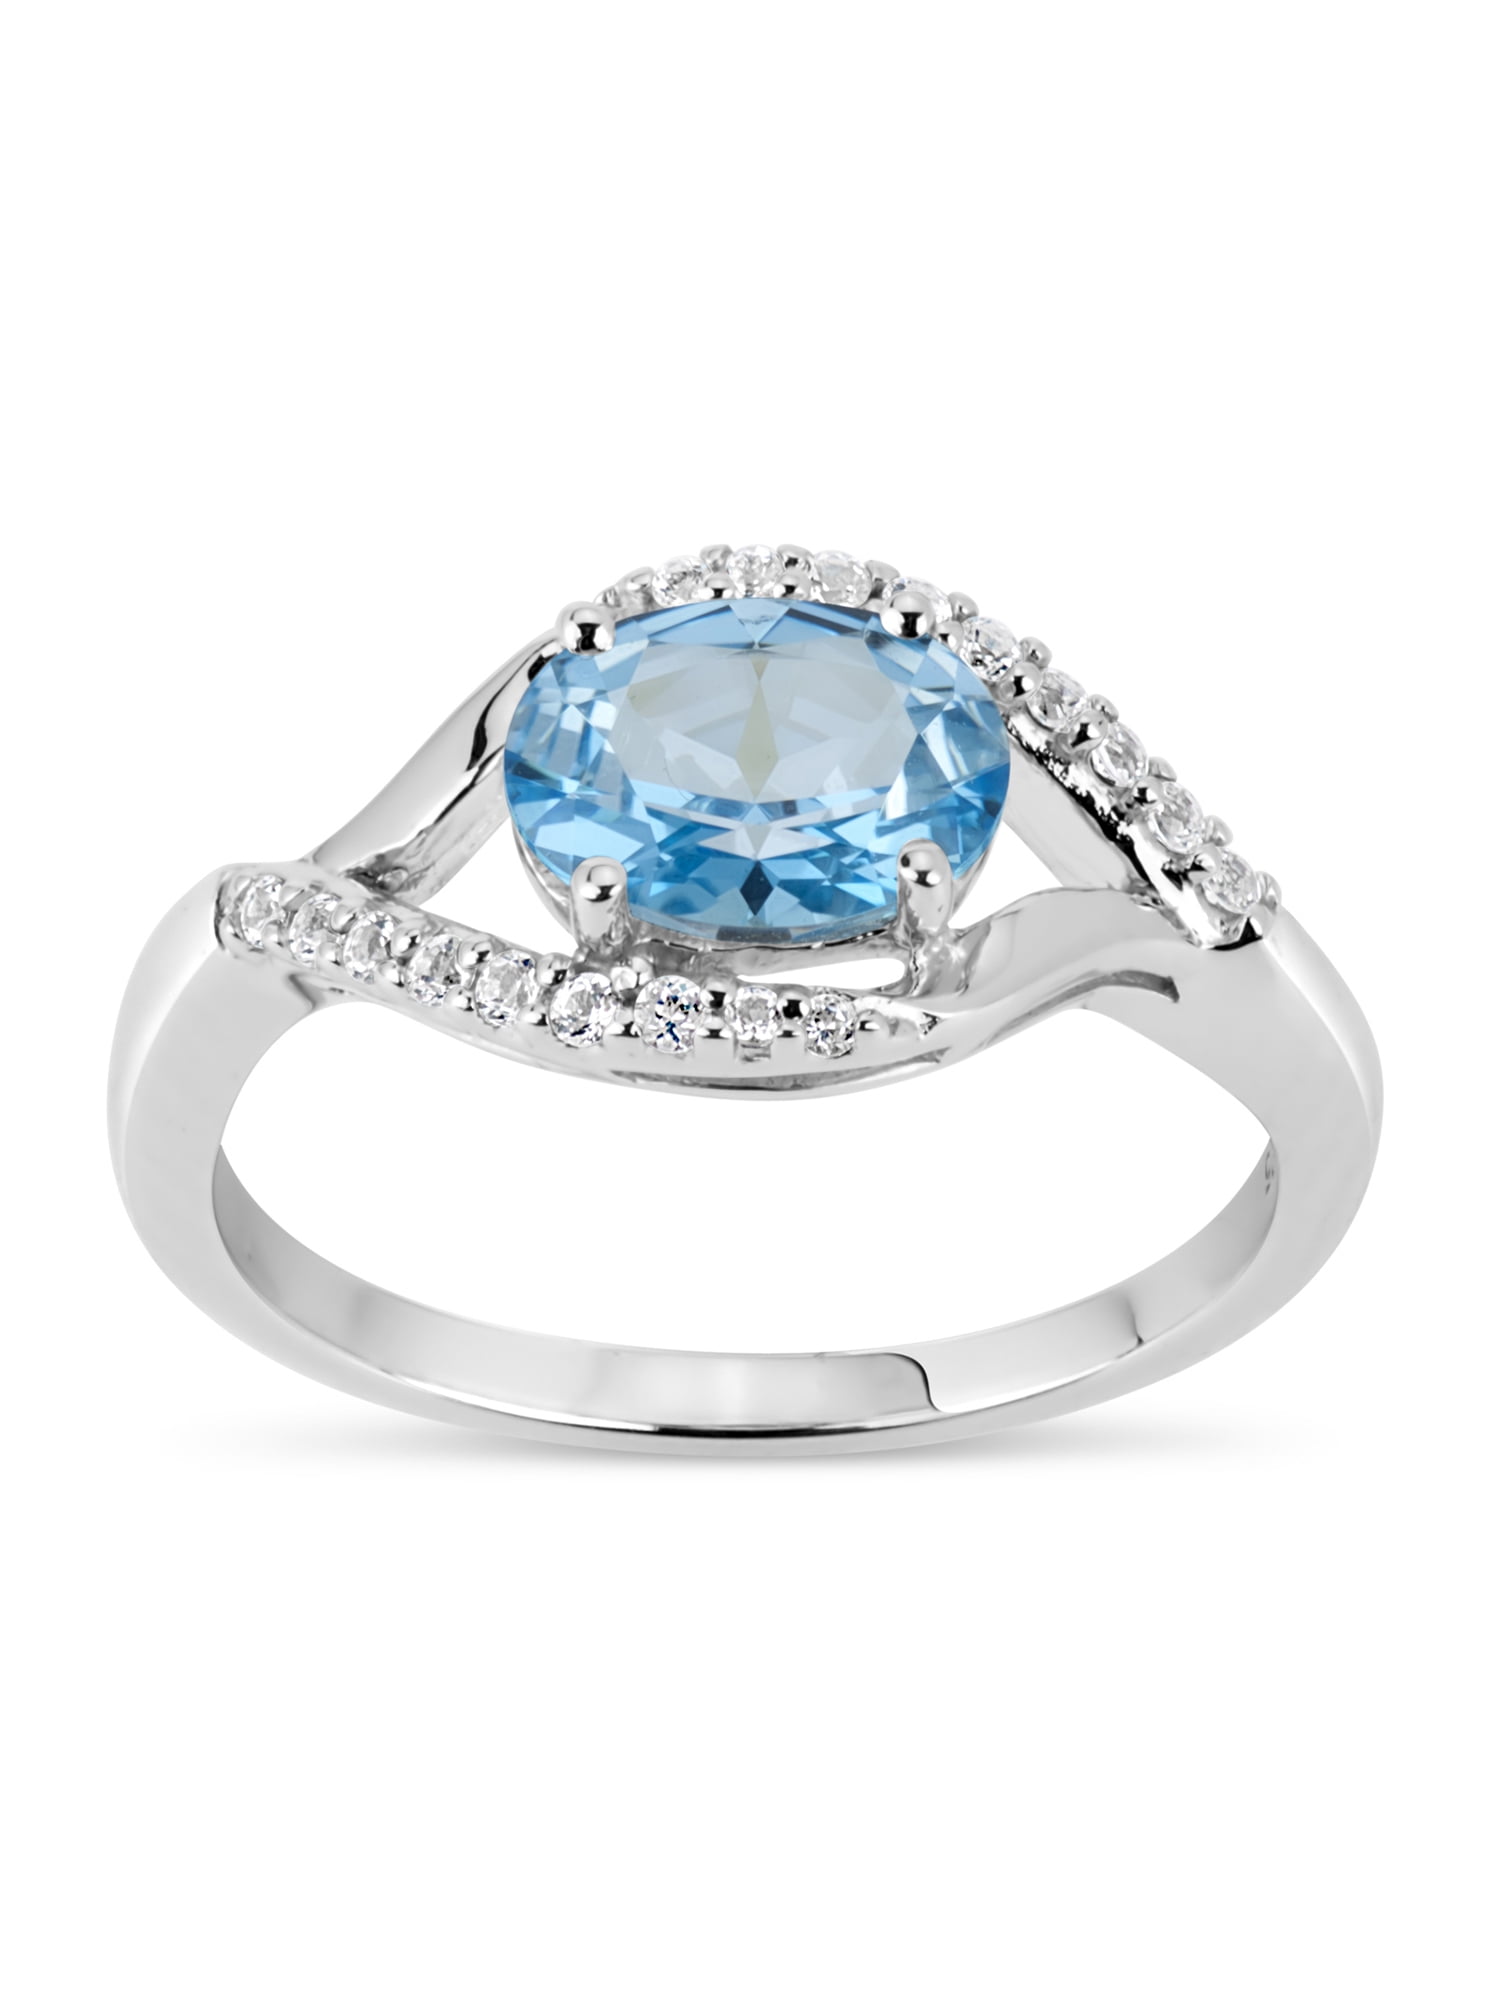 1 Ct Blue Topaz & Diamond Round Ring .925 Sterling Silver 